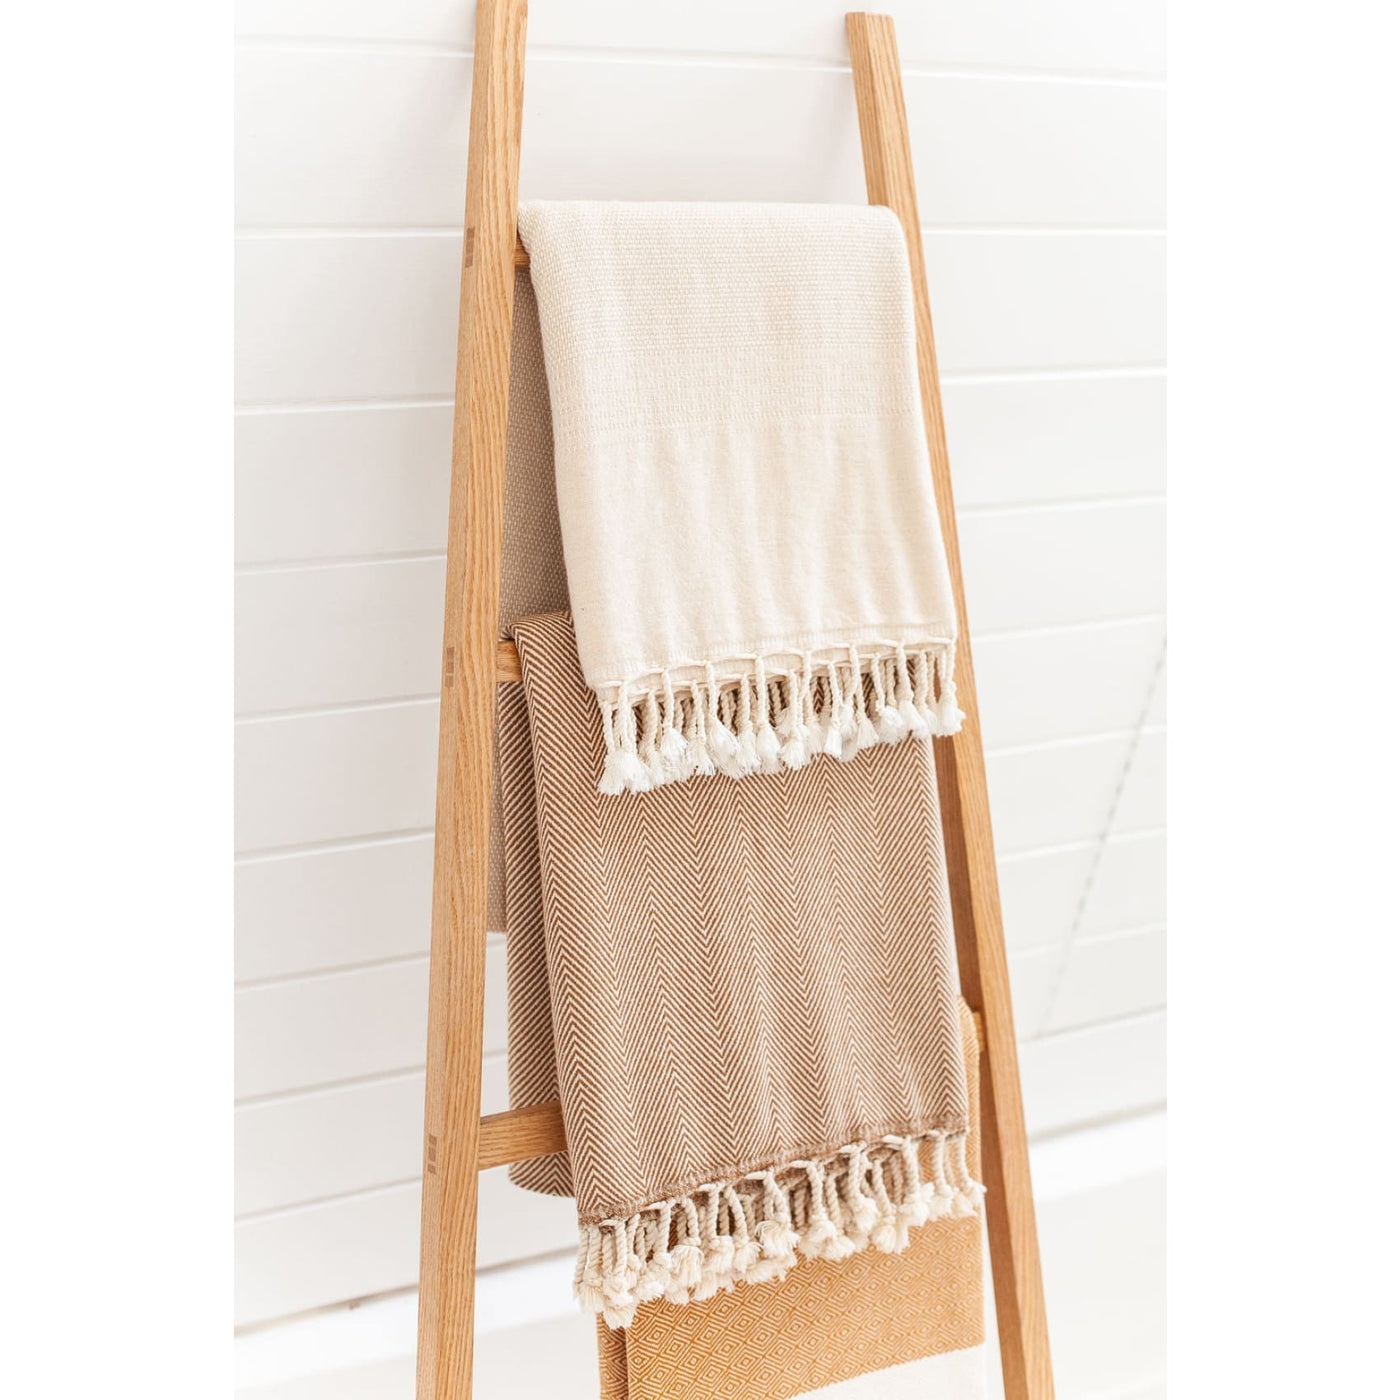 Cora Firth - Handmade Towel & Blanket Ladder in Ash or Oak